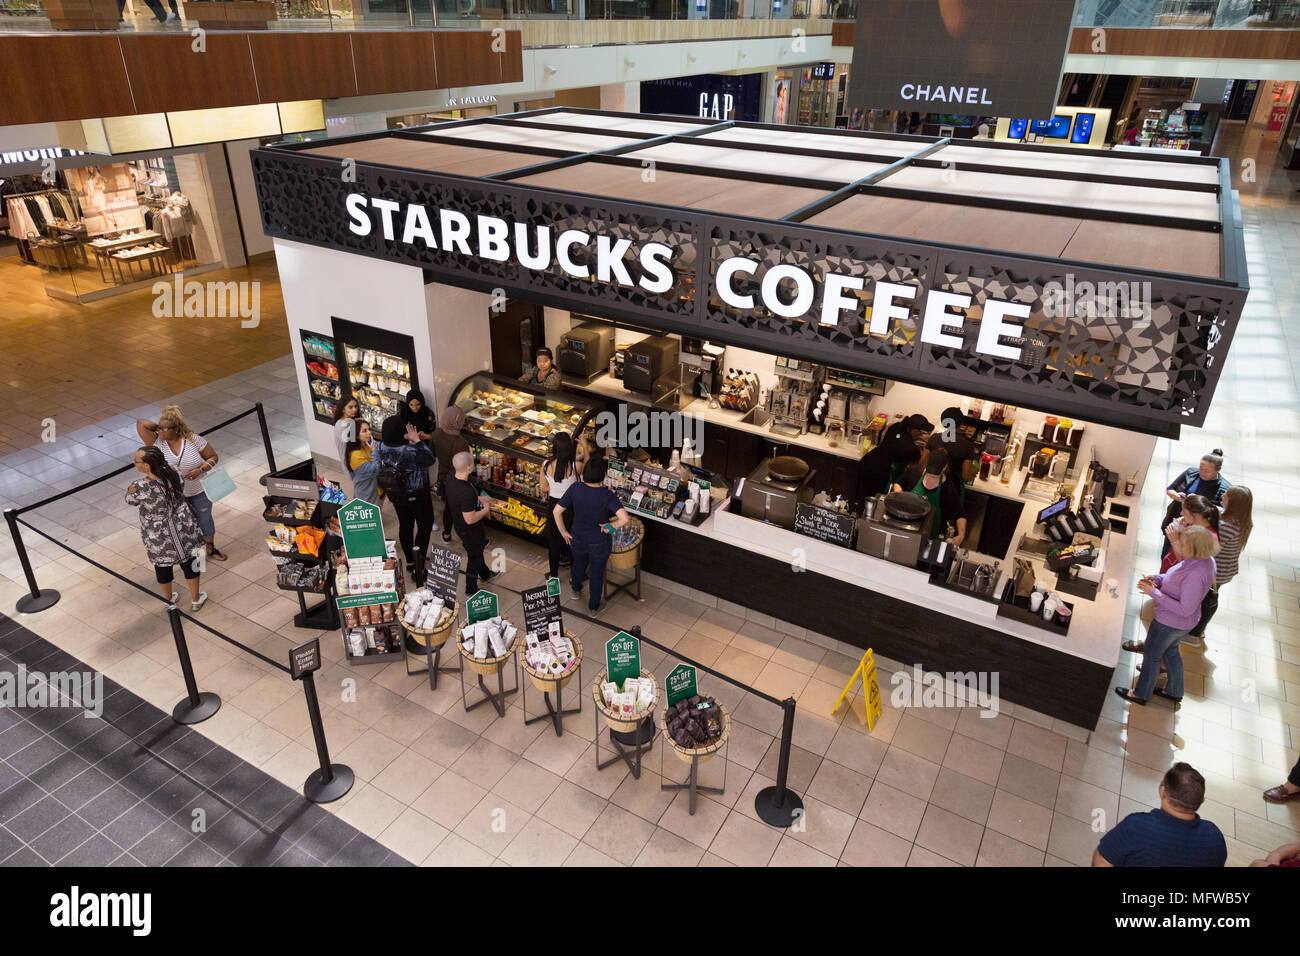 Starbucks Coffee Bar, der Galleria Shopping Mall, Houston, Texas, USA  Stockfotografie - Alamy